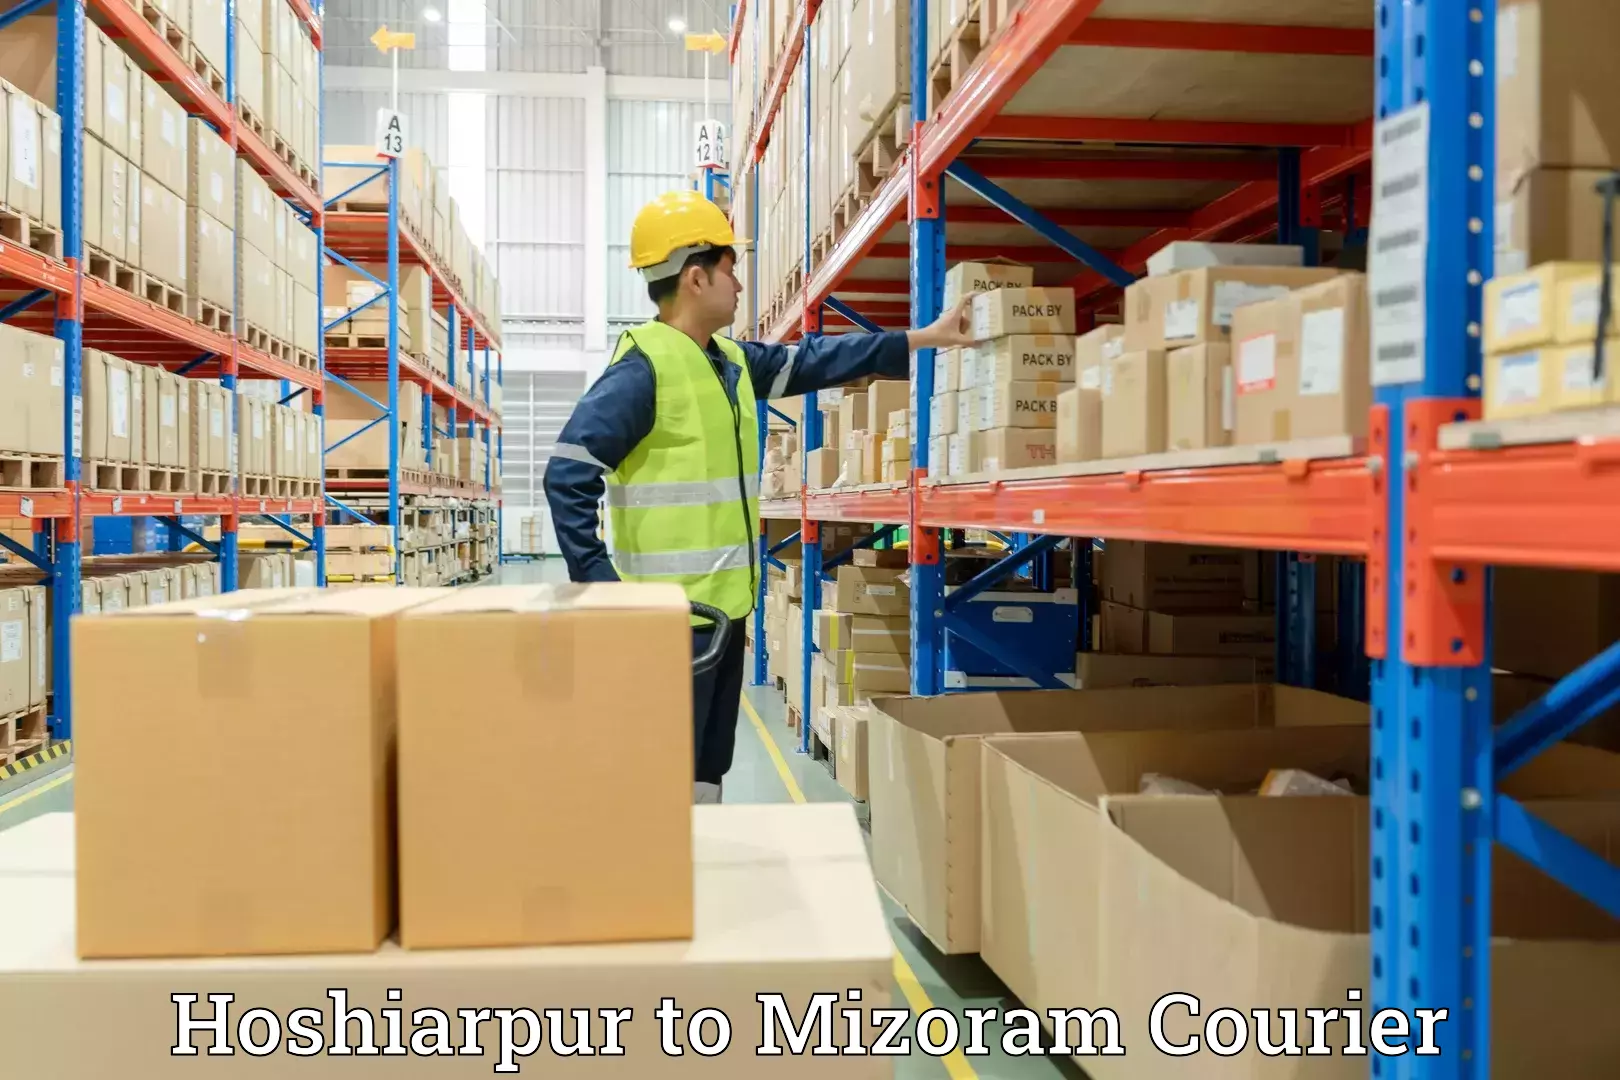 Professional moving company in Hoshiarpur to Mizoram